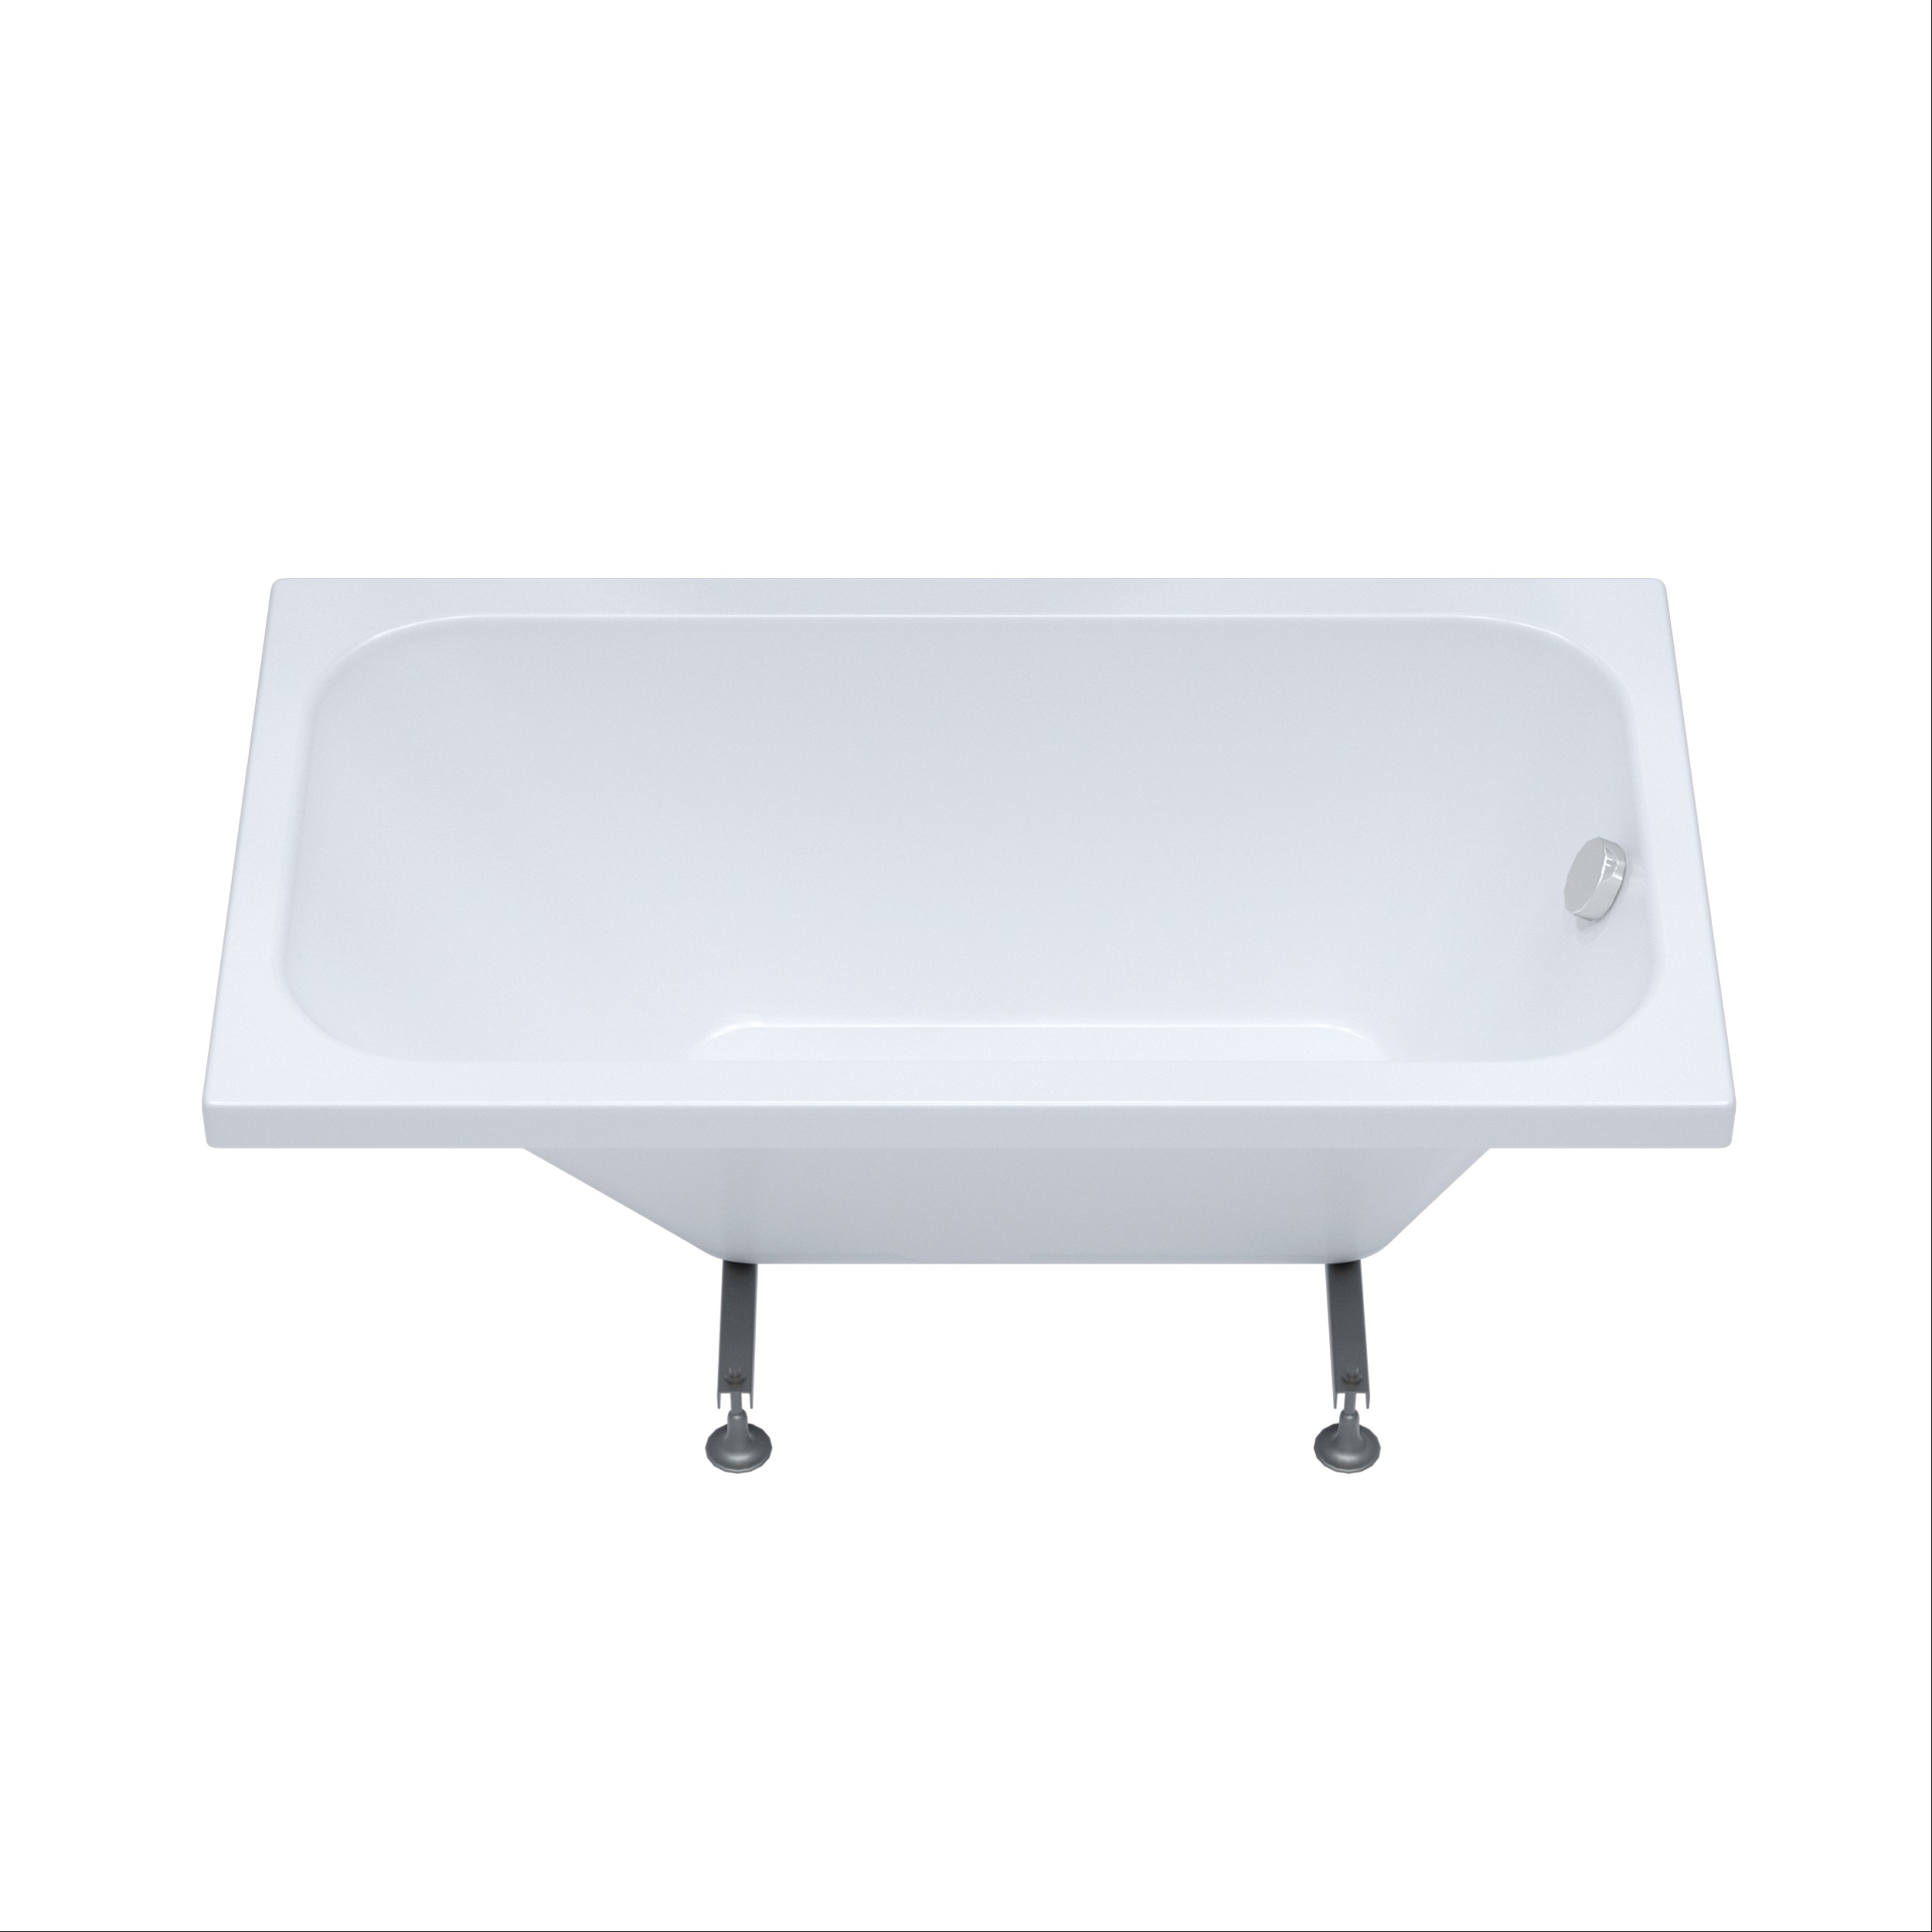 Акриловая ванна Тритон Ультра 130х70, размер 130х70, цвет белый Щ0000017401 - фото 2